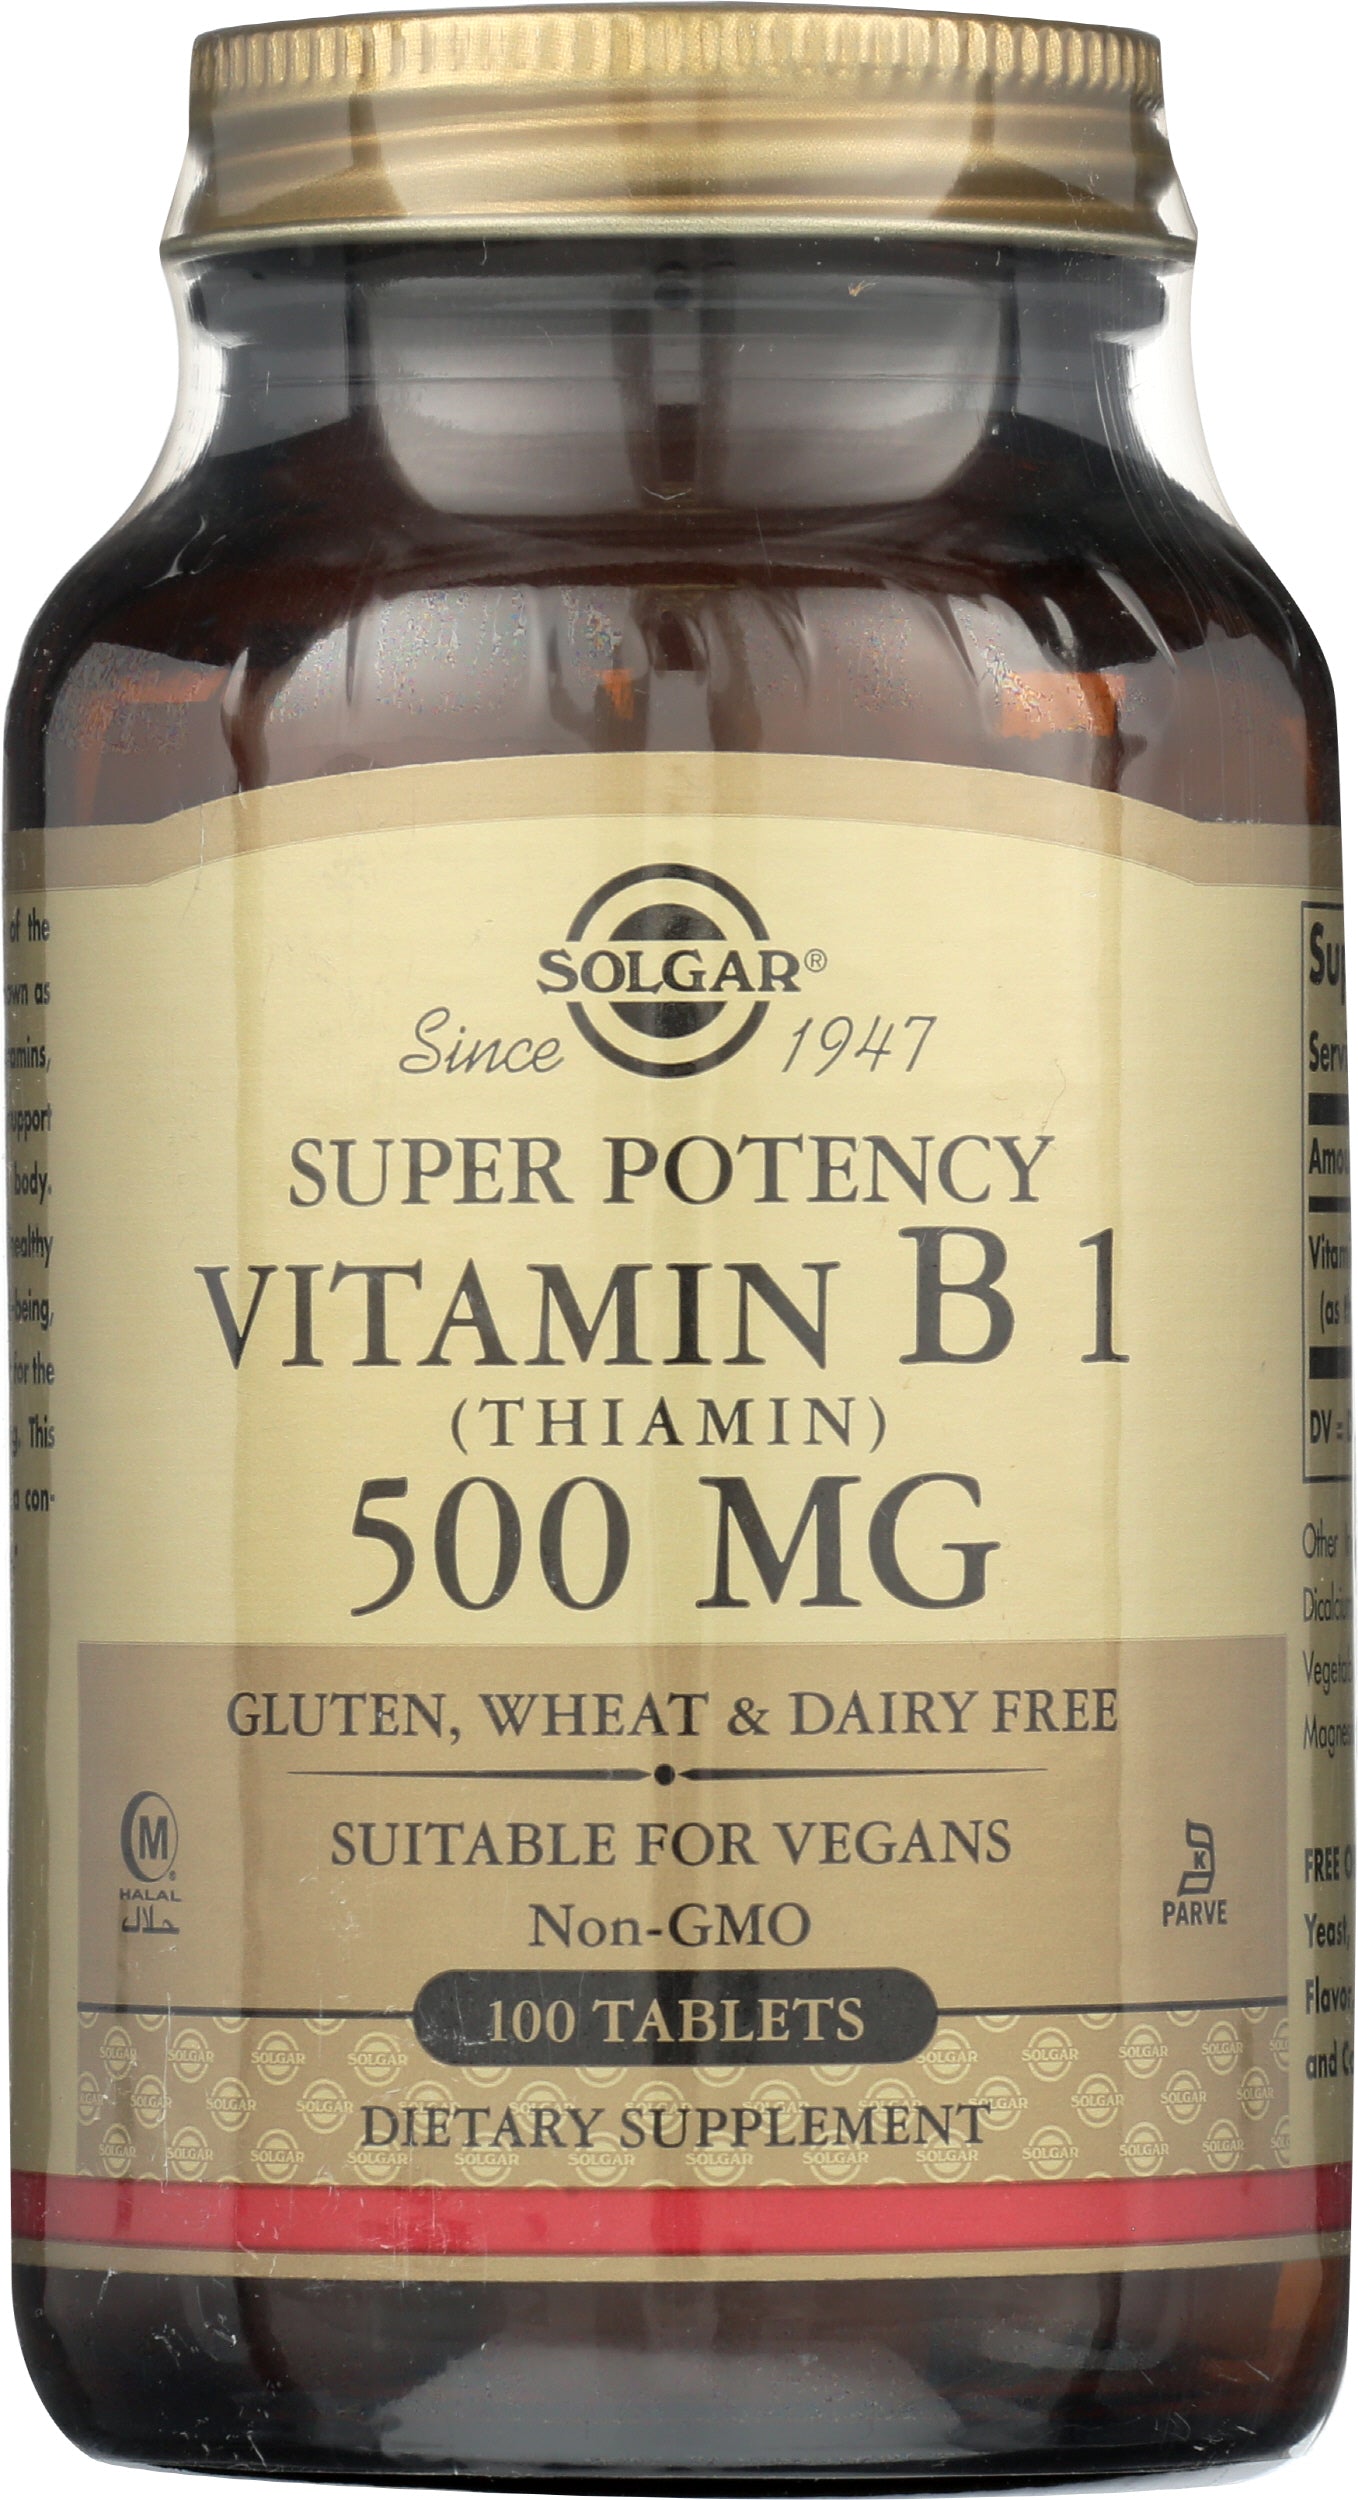 Solgar Vitmain B 1 (Thiamin) 500 mg 100 Tablets Front of Bottle